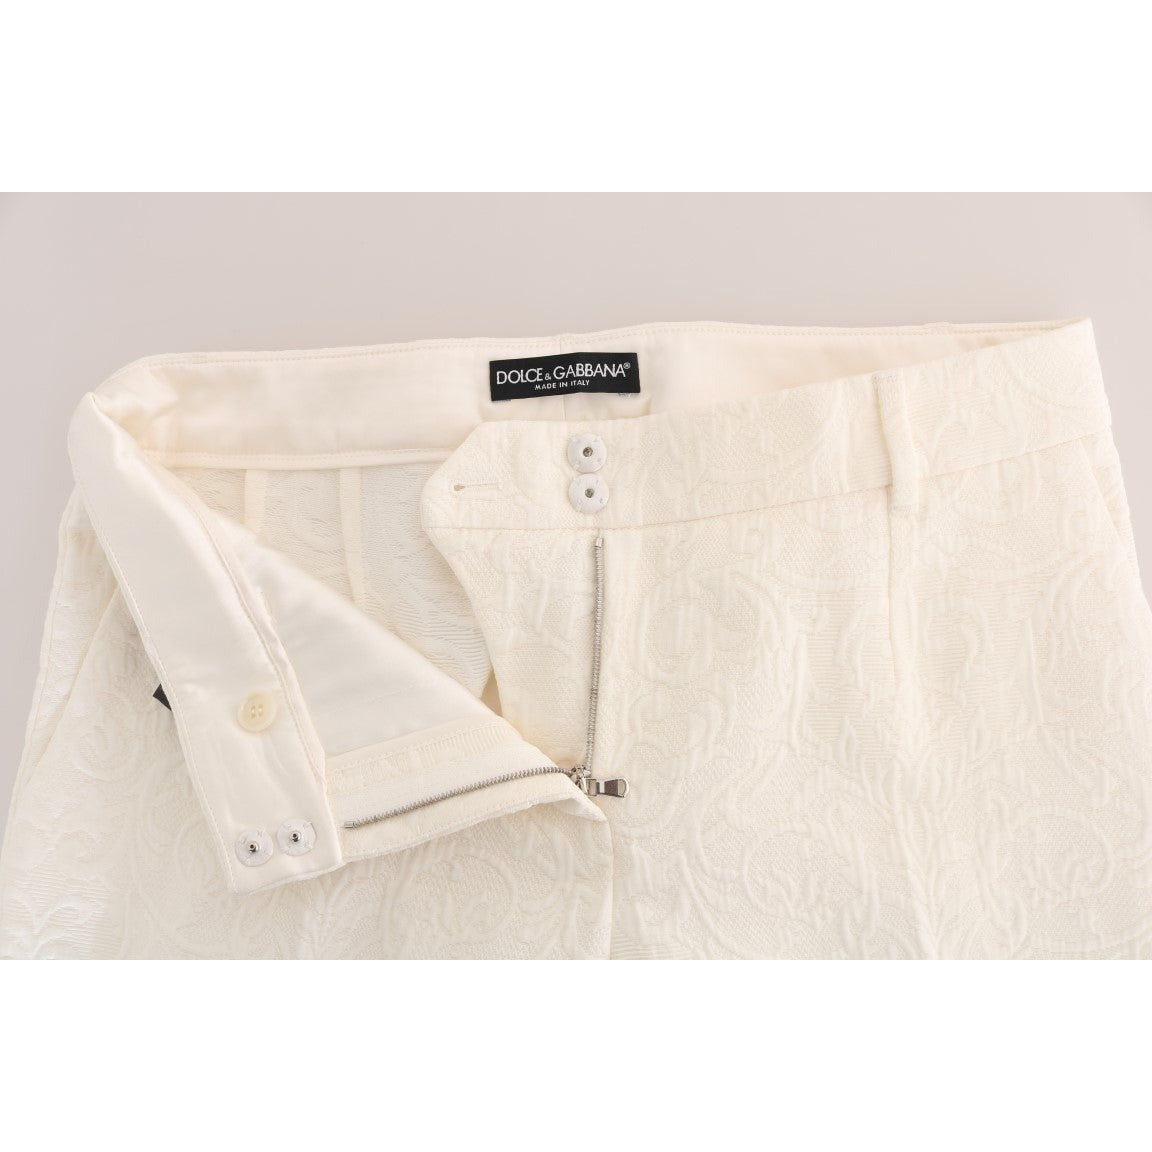 Dolce & GabbanaElegant White Capri Pants - Cotton & Silk BlendMcRichard Designer Brands£279.00